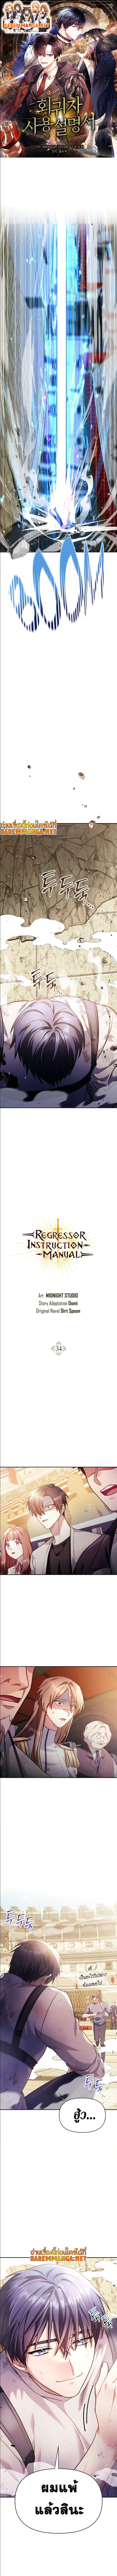 Regressor Instruction Manual 34 (1)